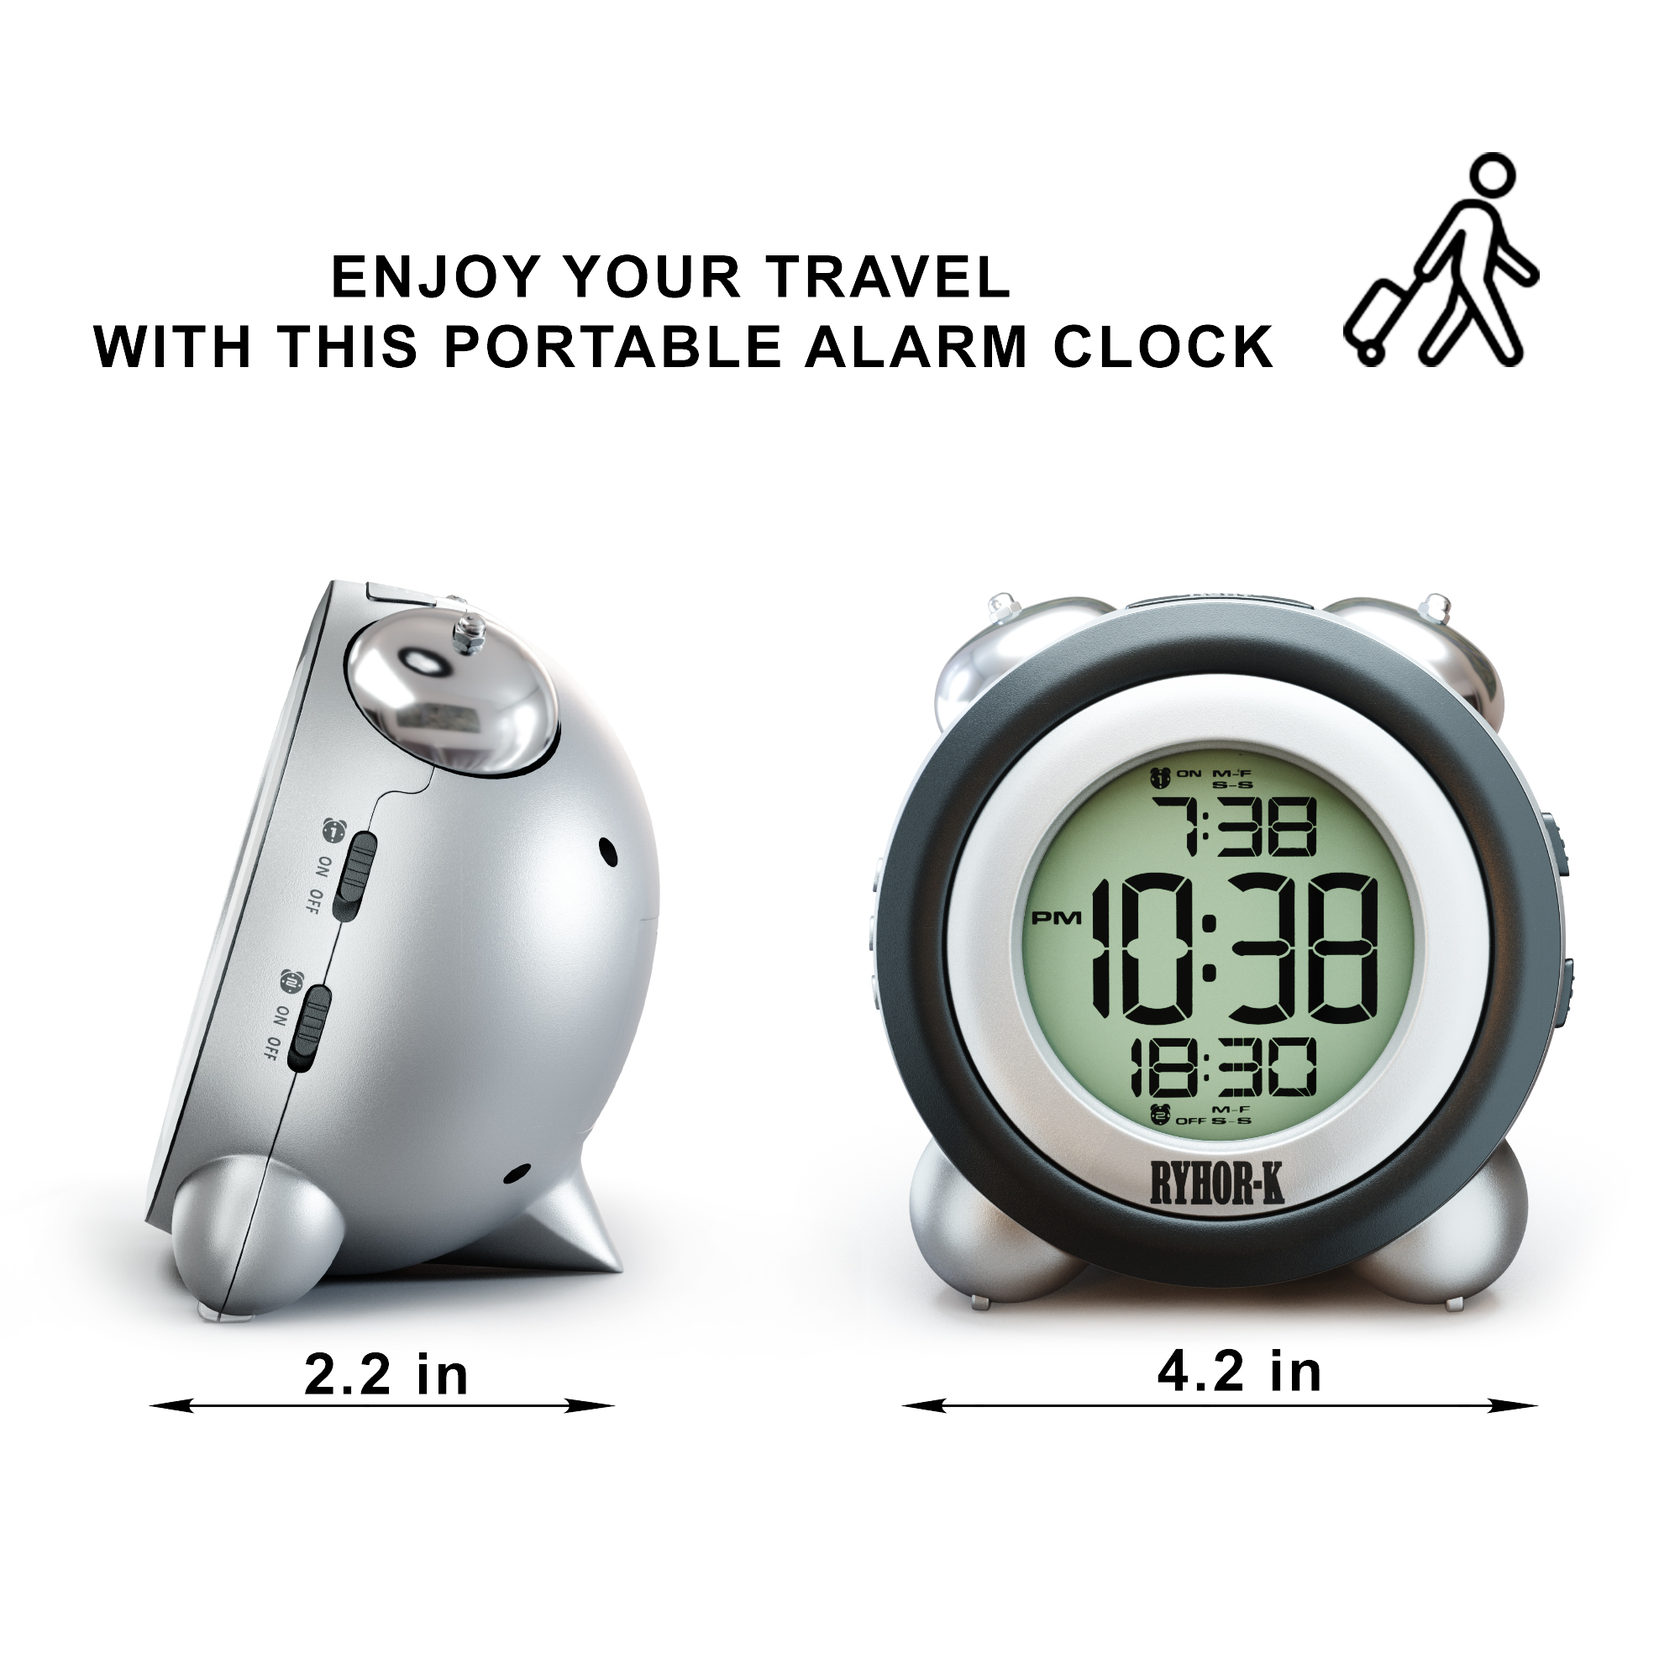 Ryhor-k alarm clock user manual pdf online